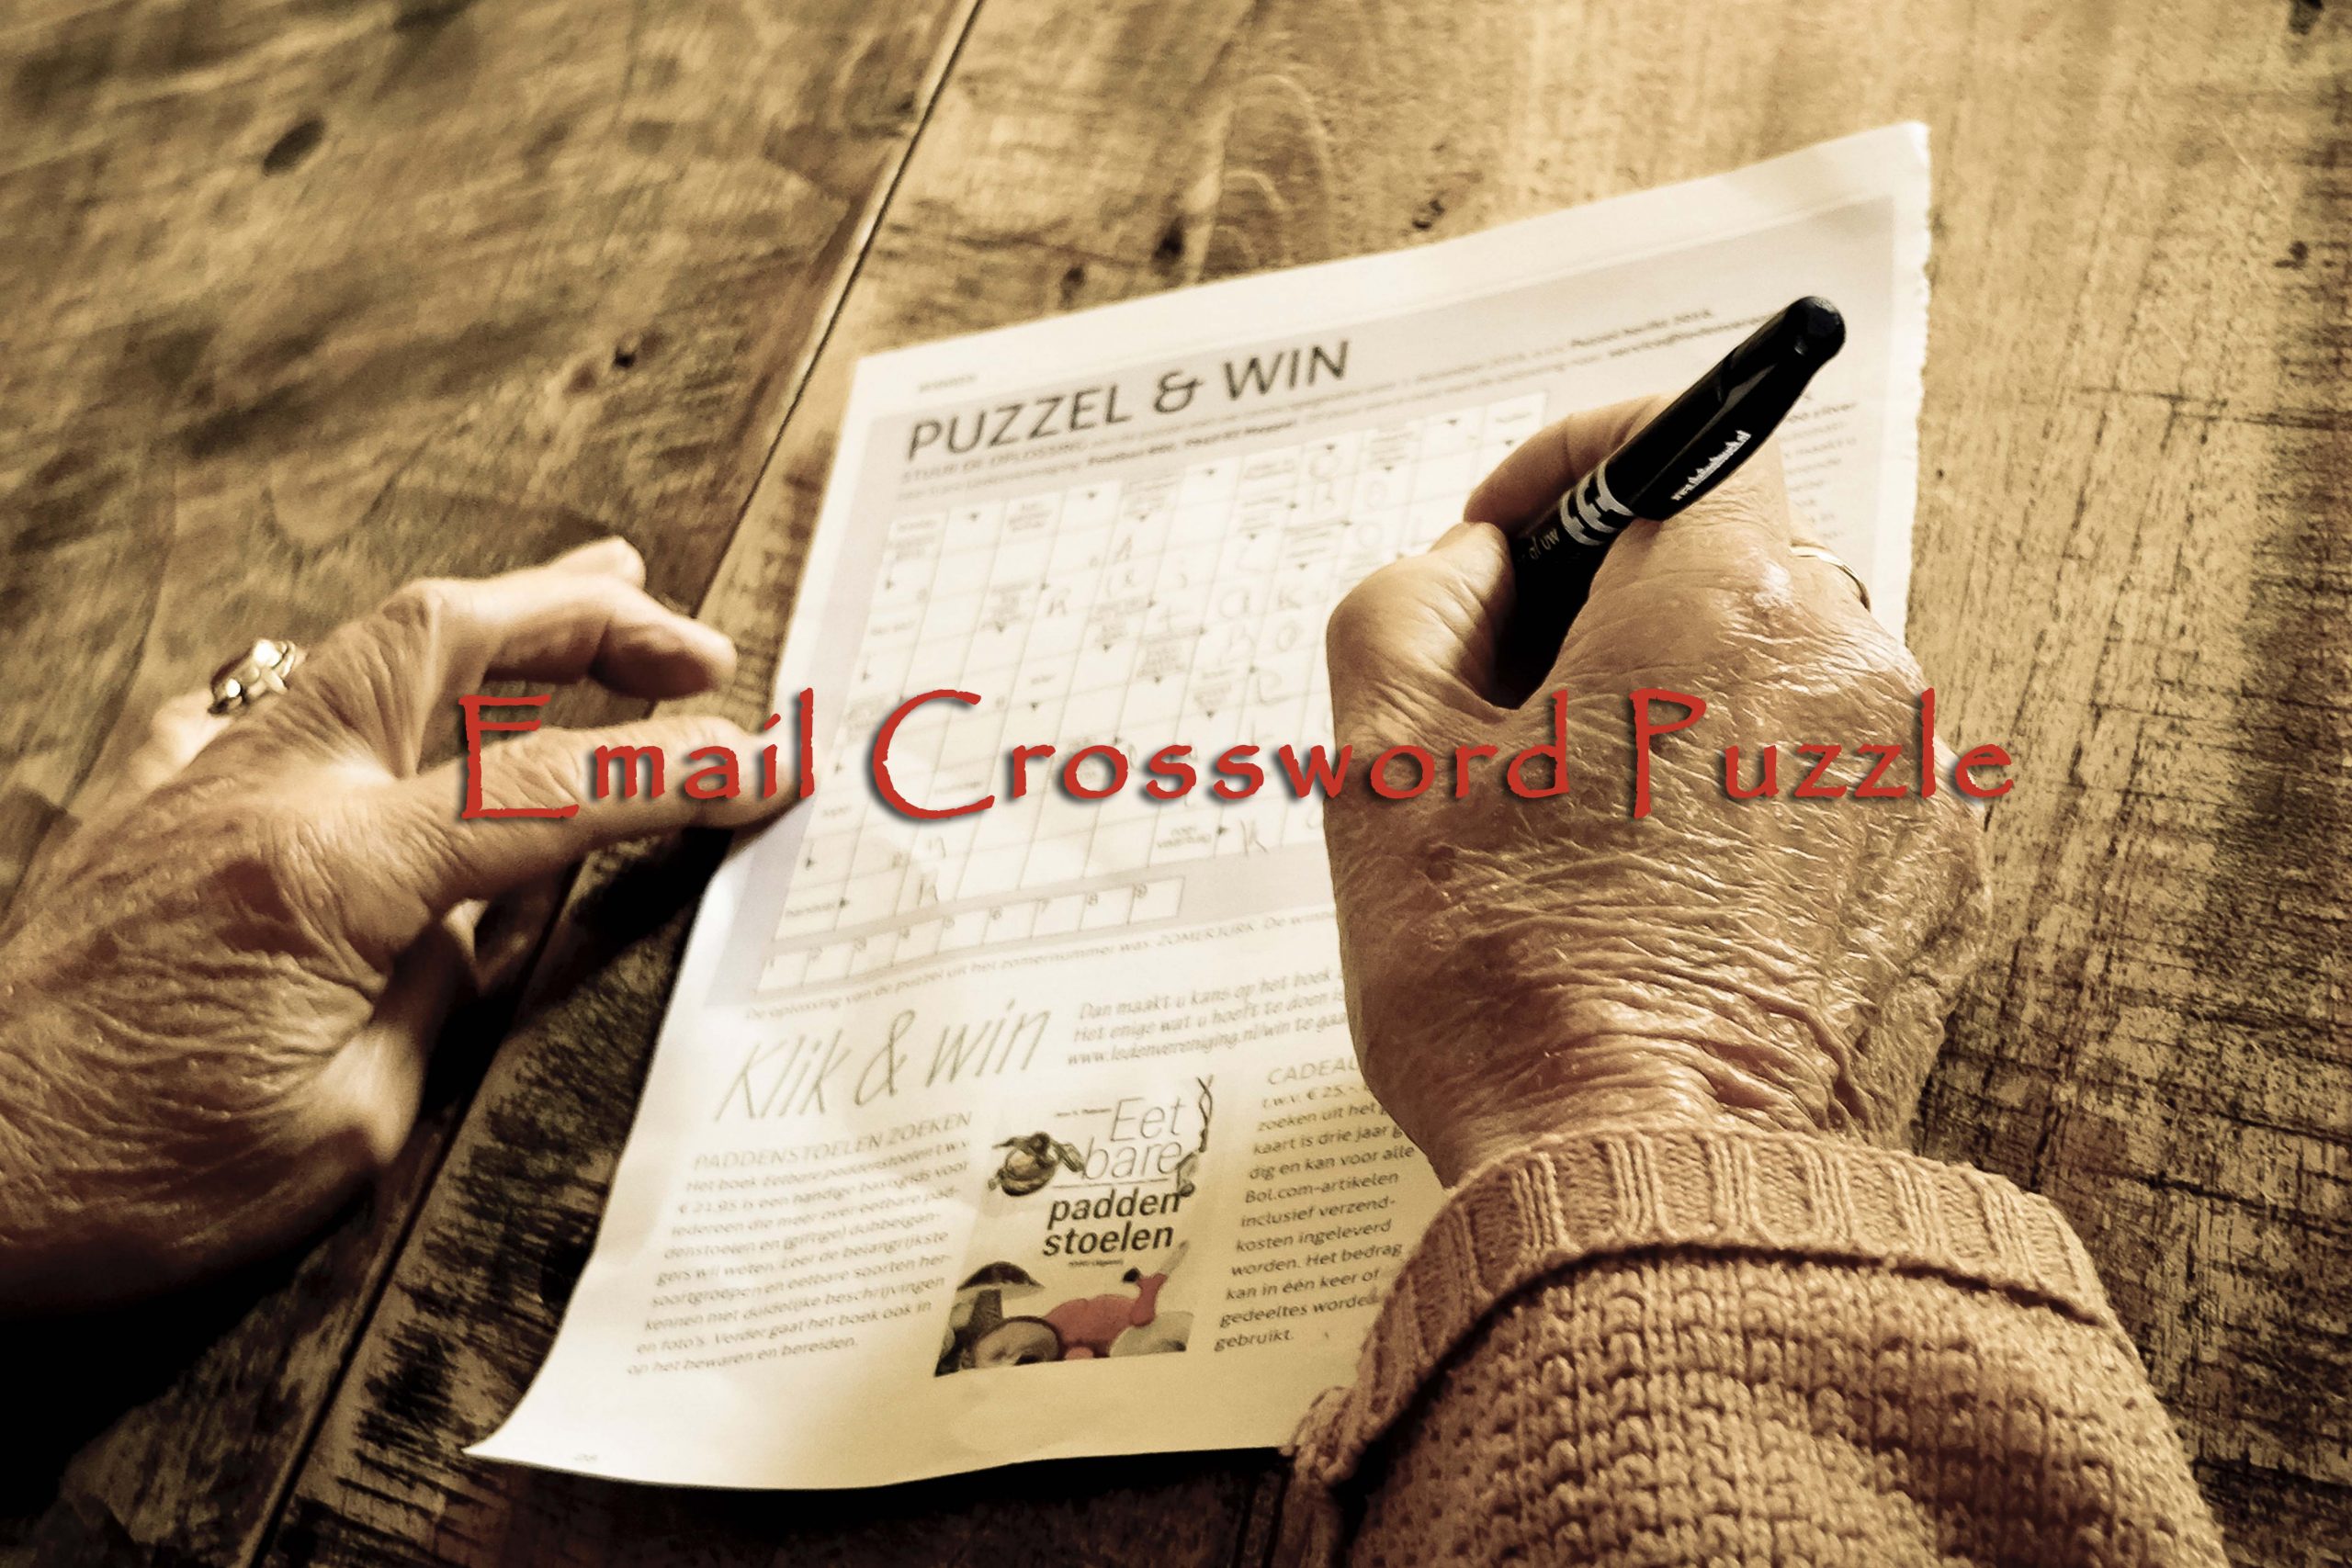 Email Crossword Puzzle